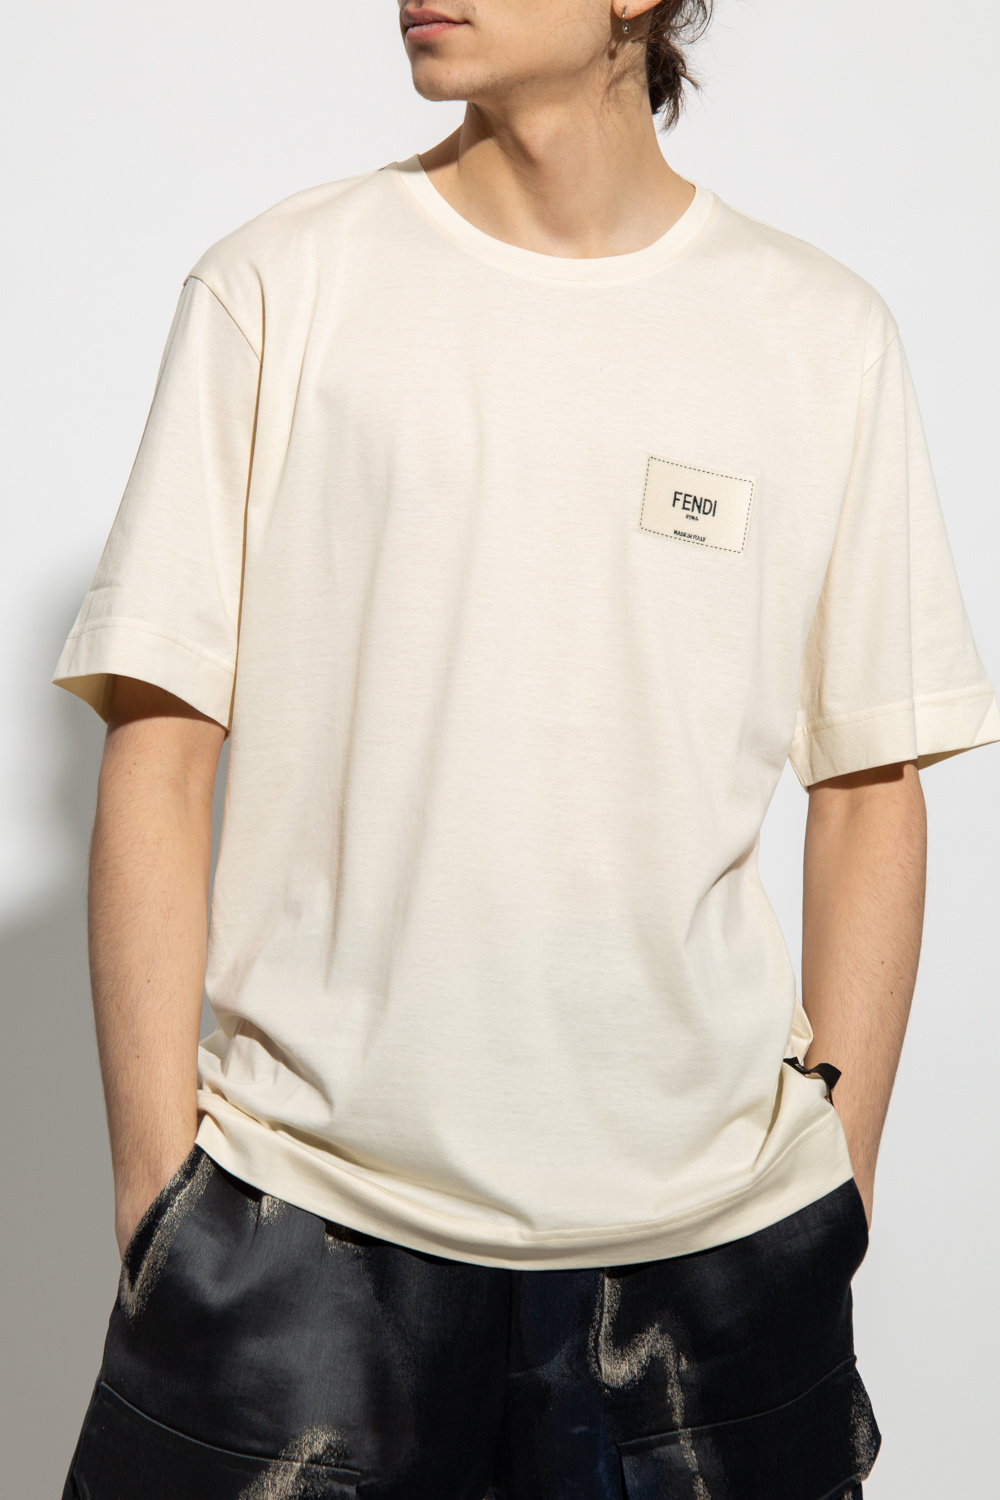 Fendi T-shirt with logo patches | Men's Clothing | Vitkac